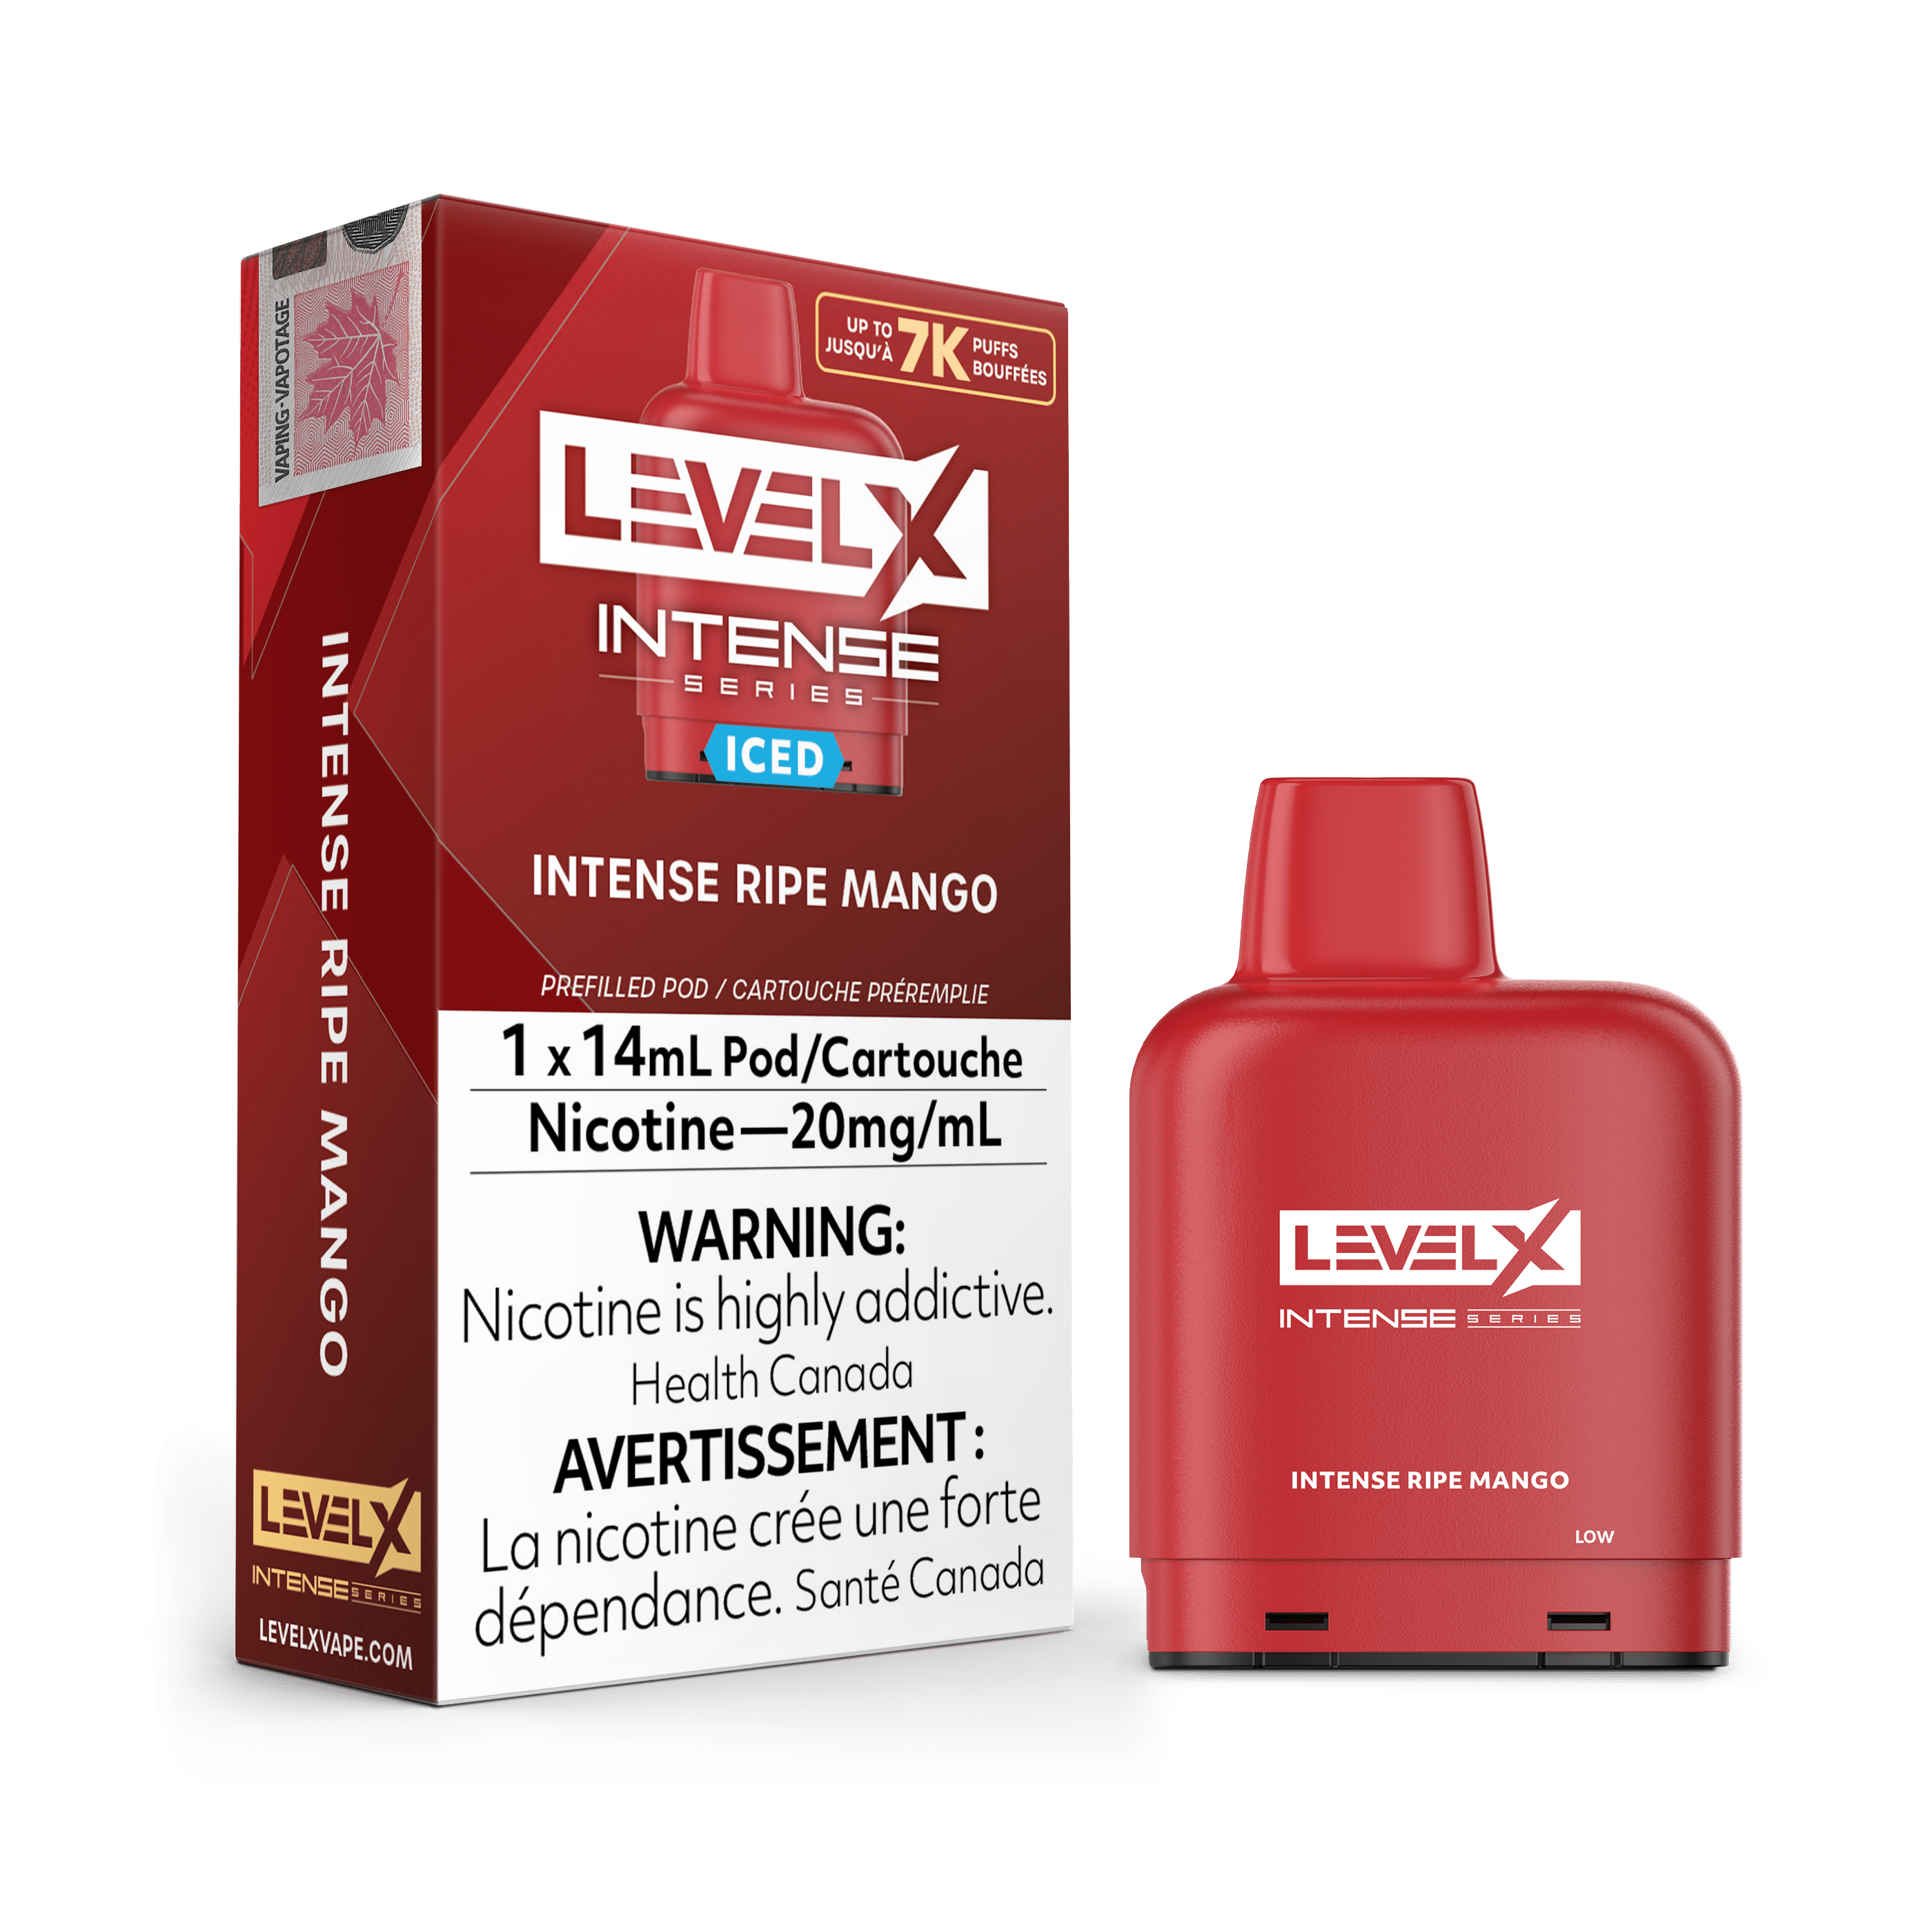 Level X Intense Series Pod - Intense Ripe Mango available on Canada online vape shop